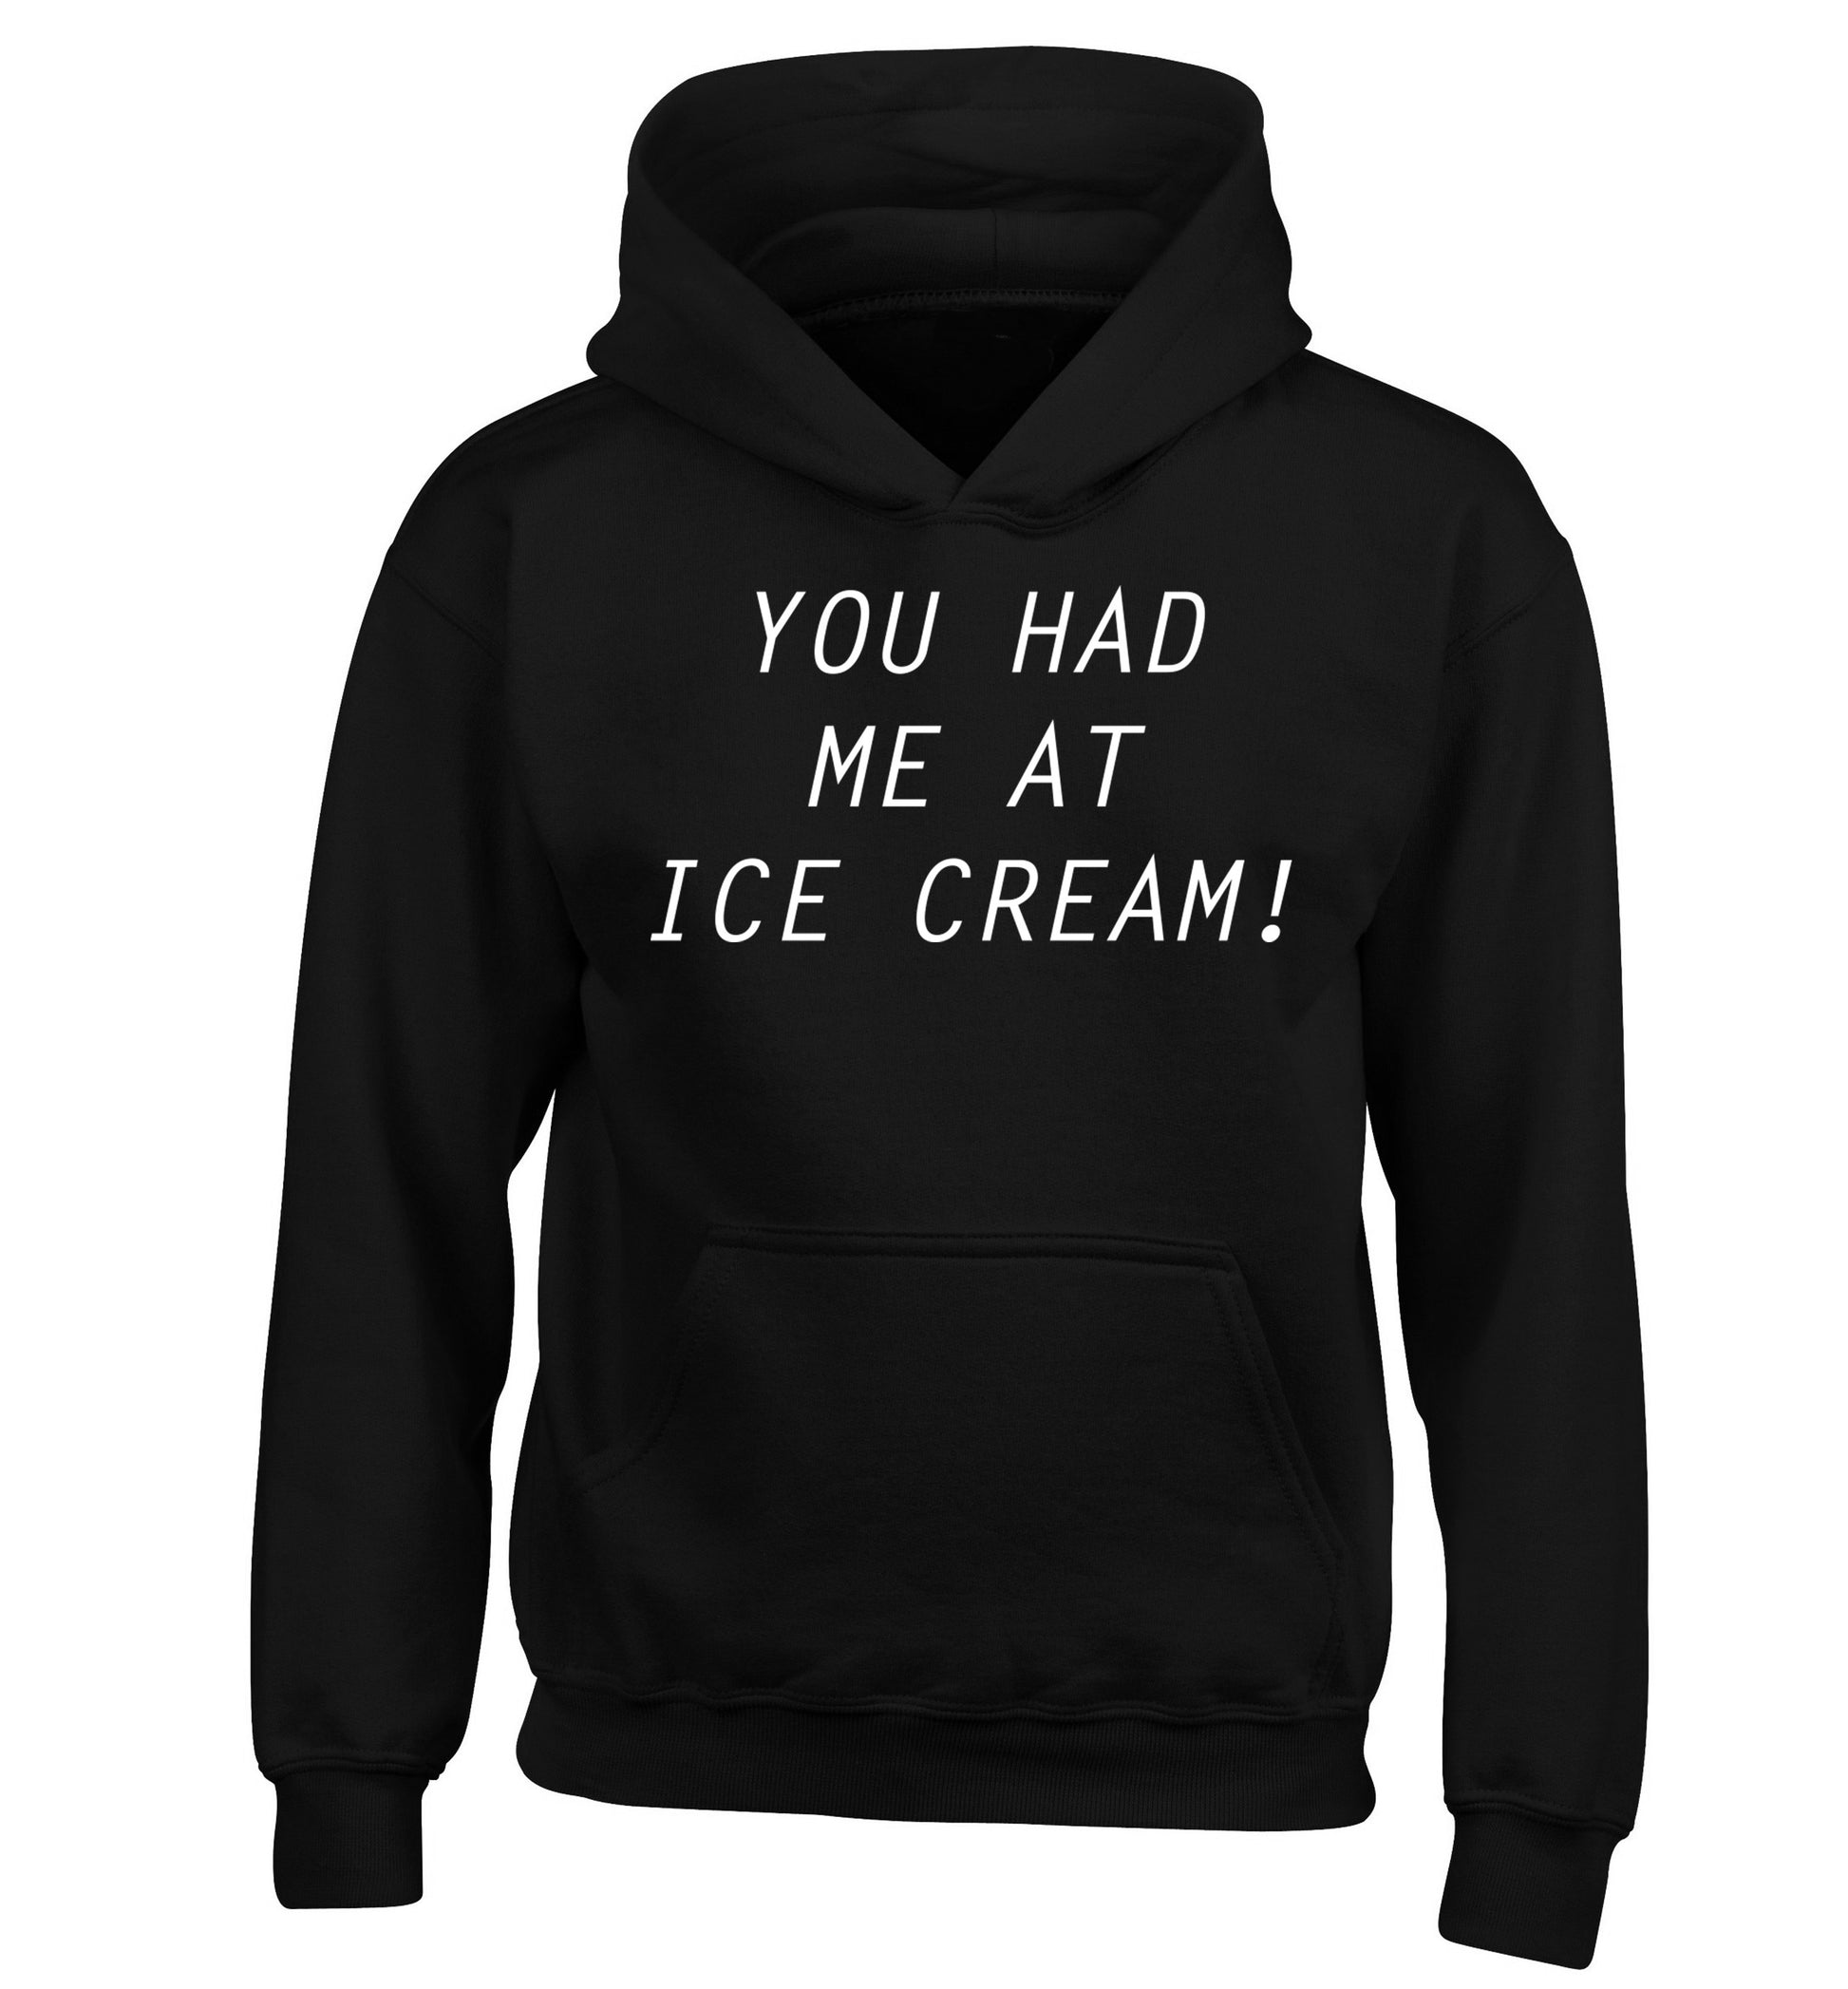 You had me at ice cream children's black hoodie 12-14 Years